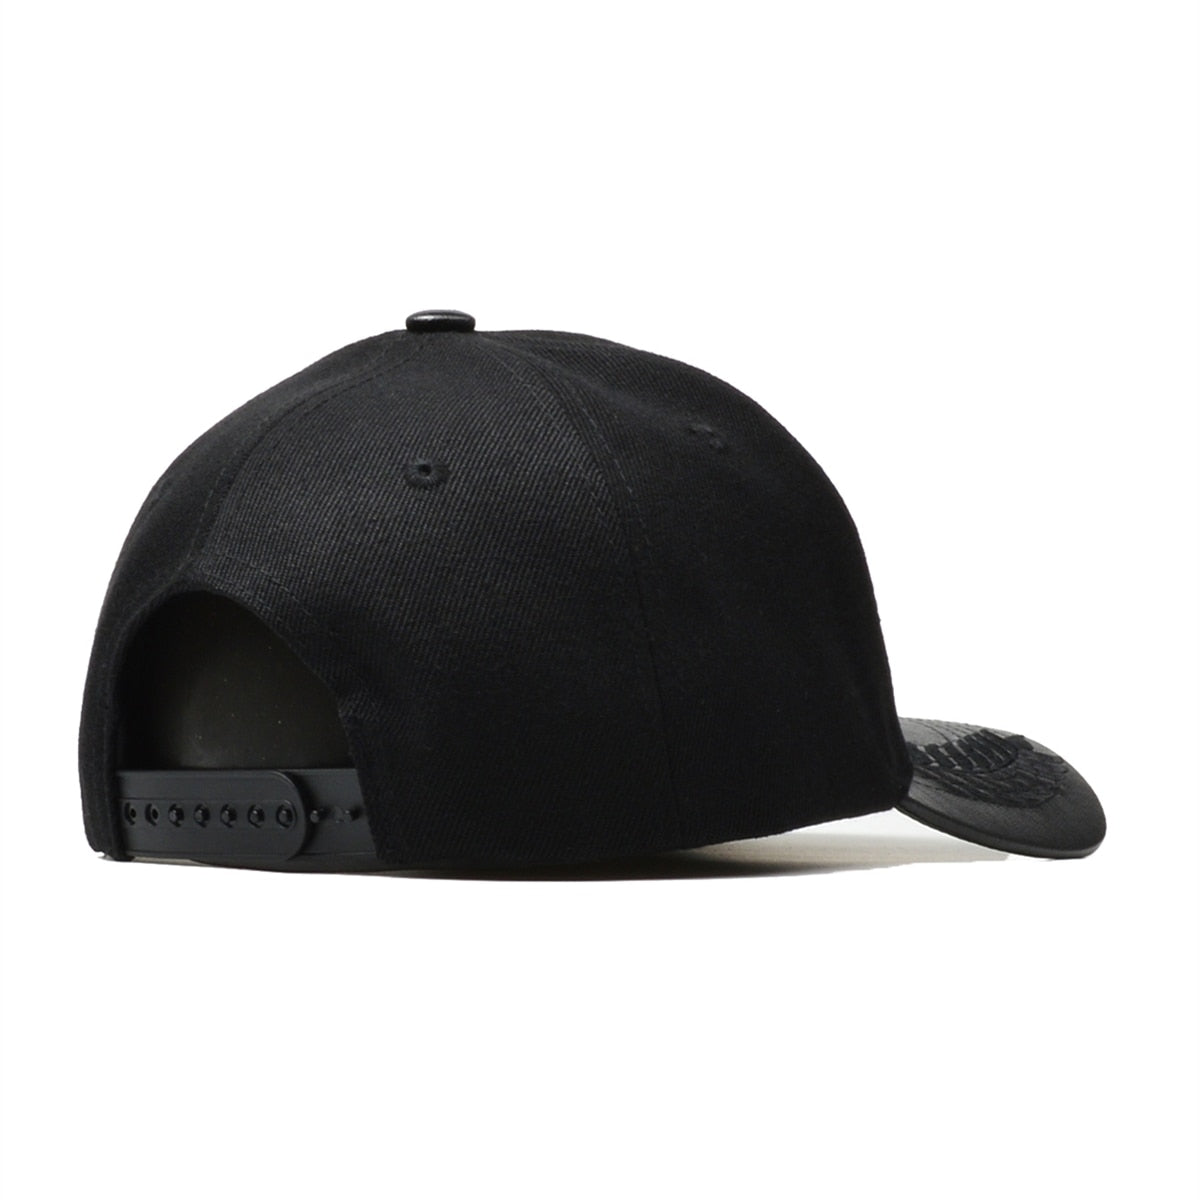 Black Cap Fashion Baseball Cap for Men Women Hip Hop Snapback Hats Bone Casquette Adjustable Trucker Hat Male